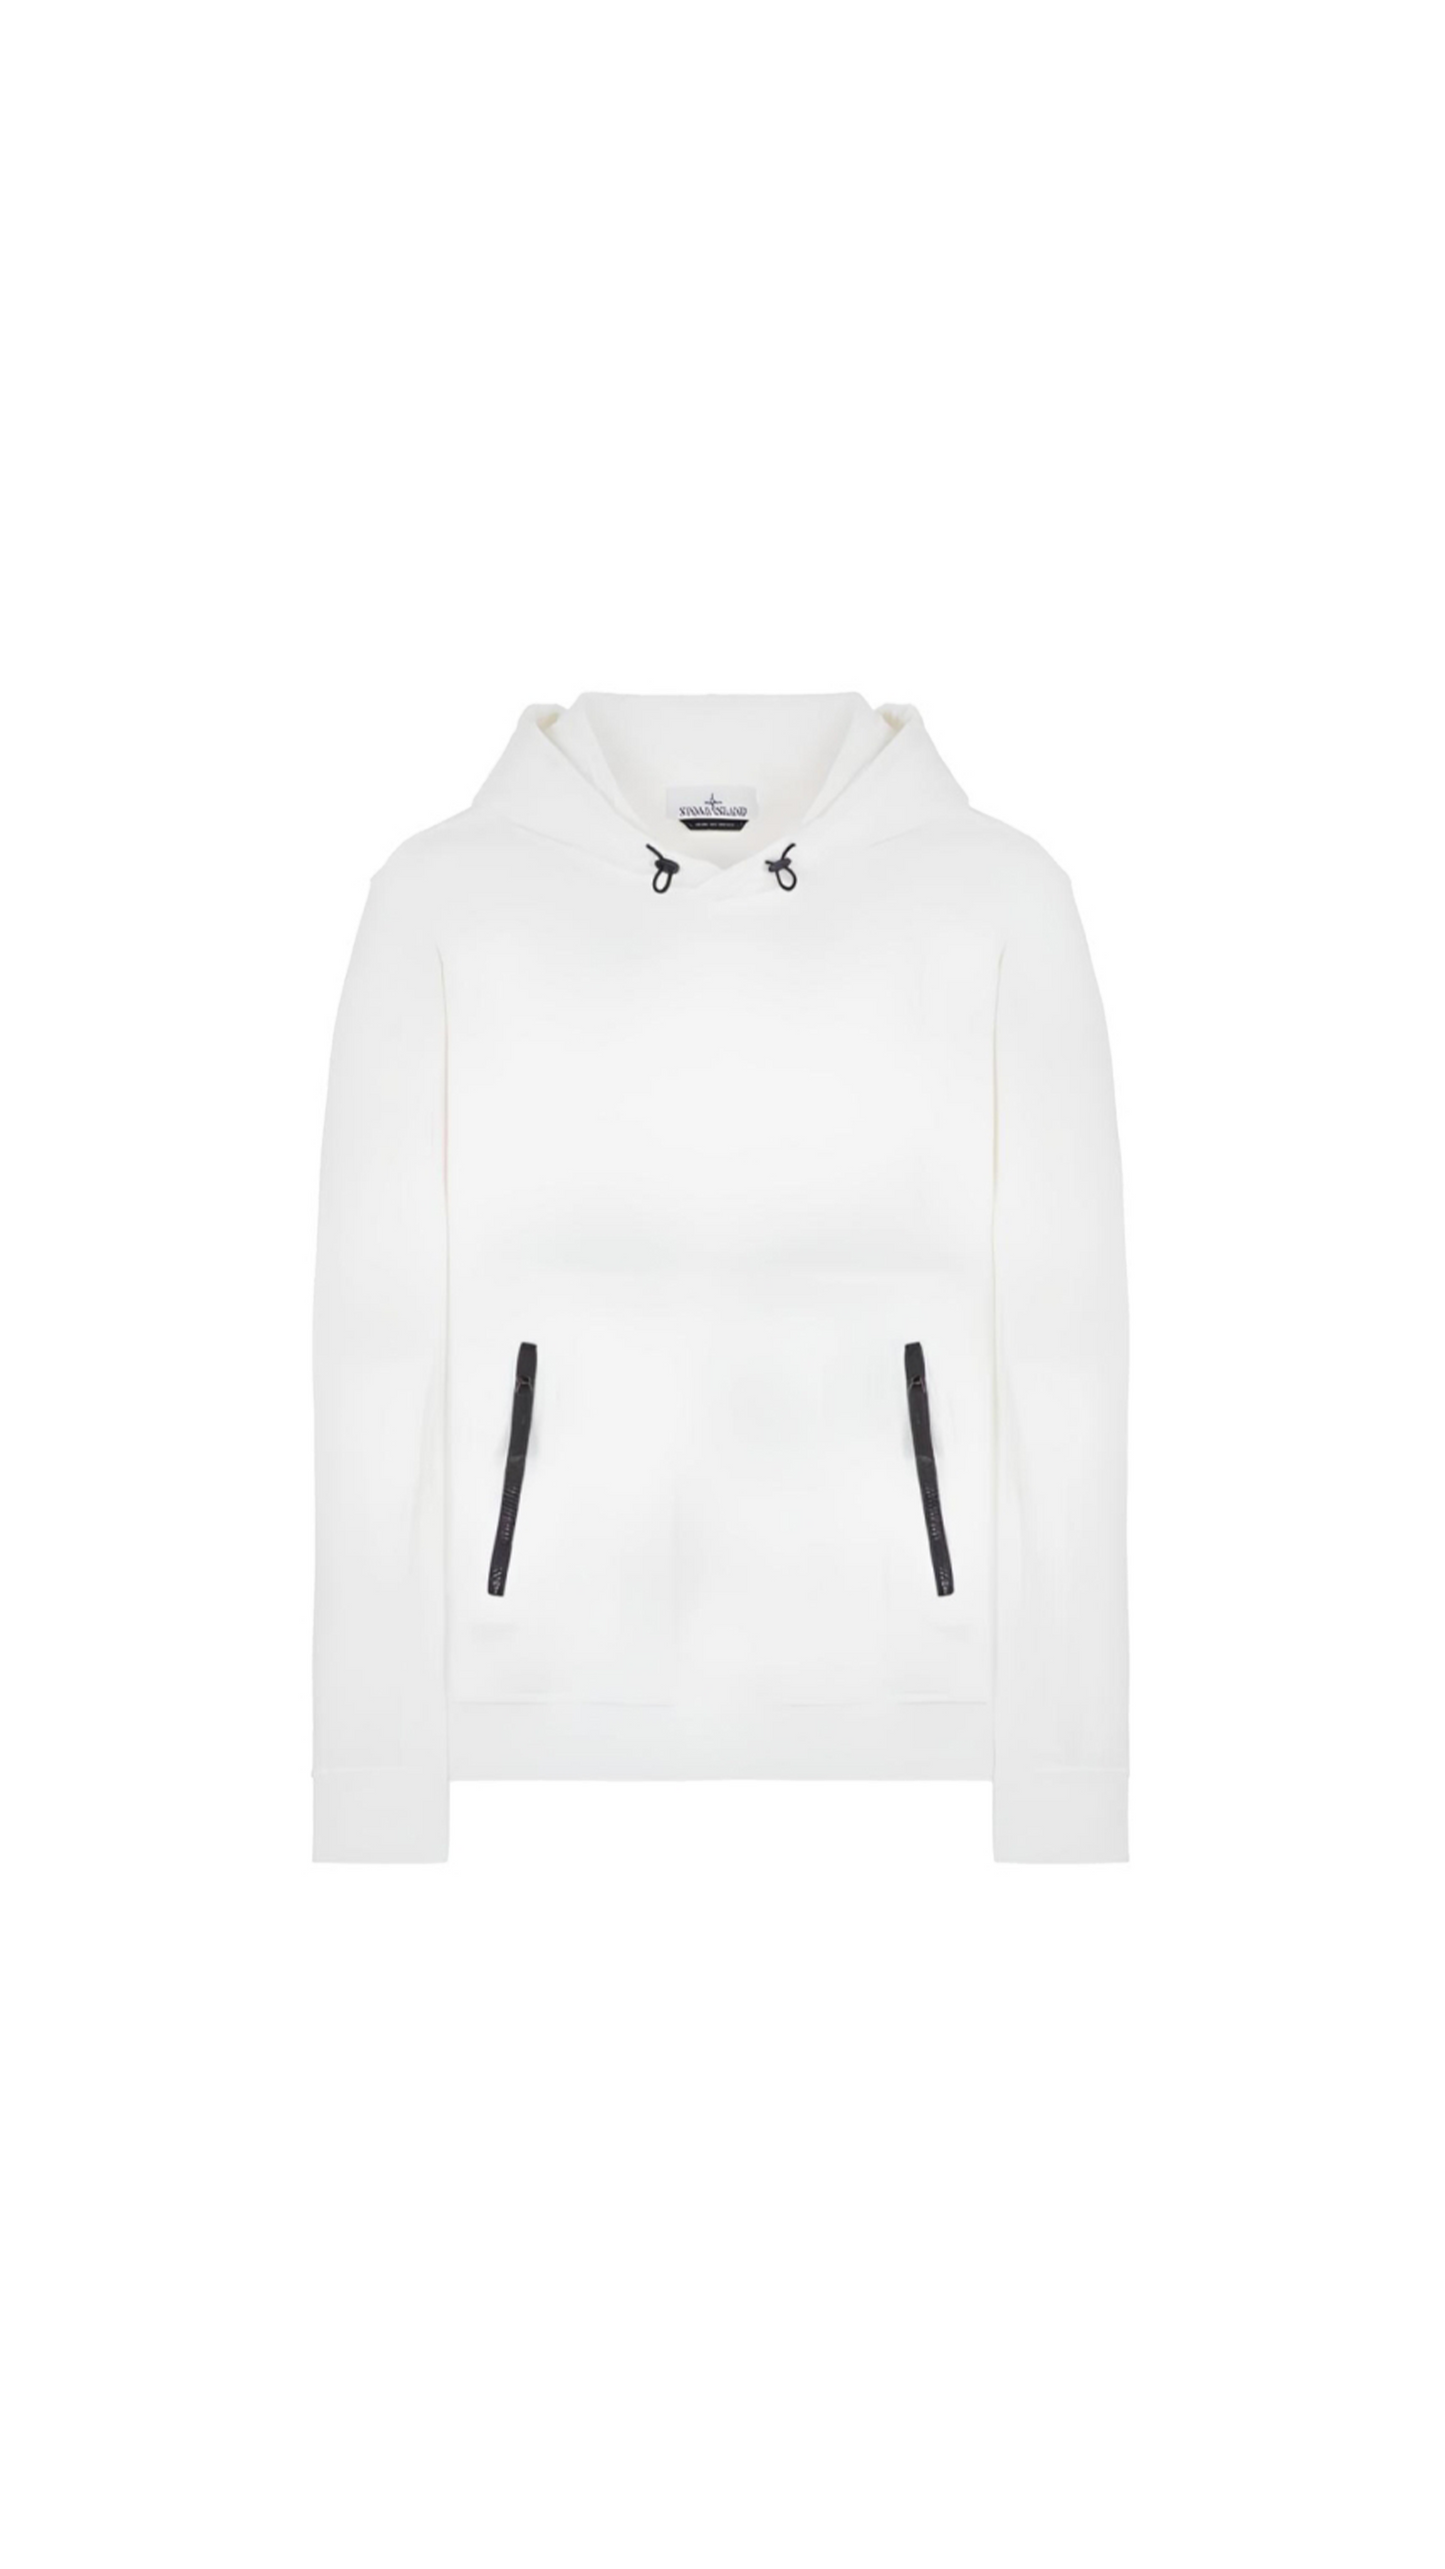 65777 Hooded Sweatshirt - White